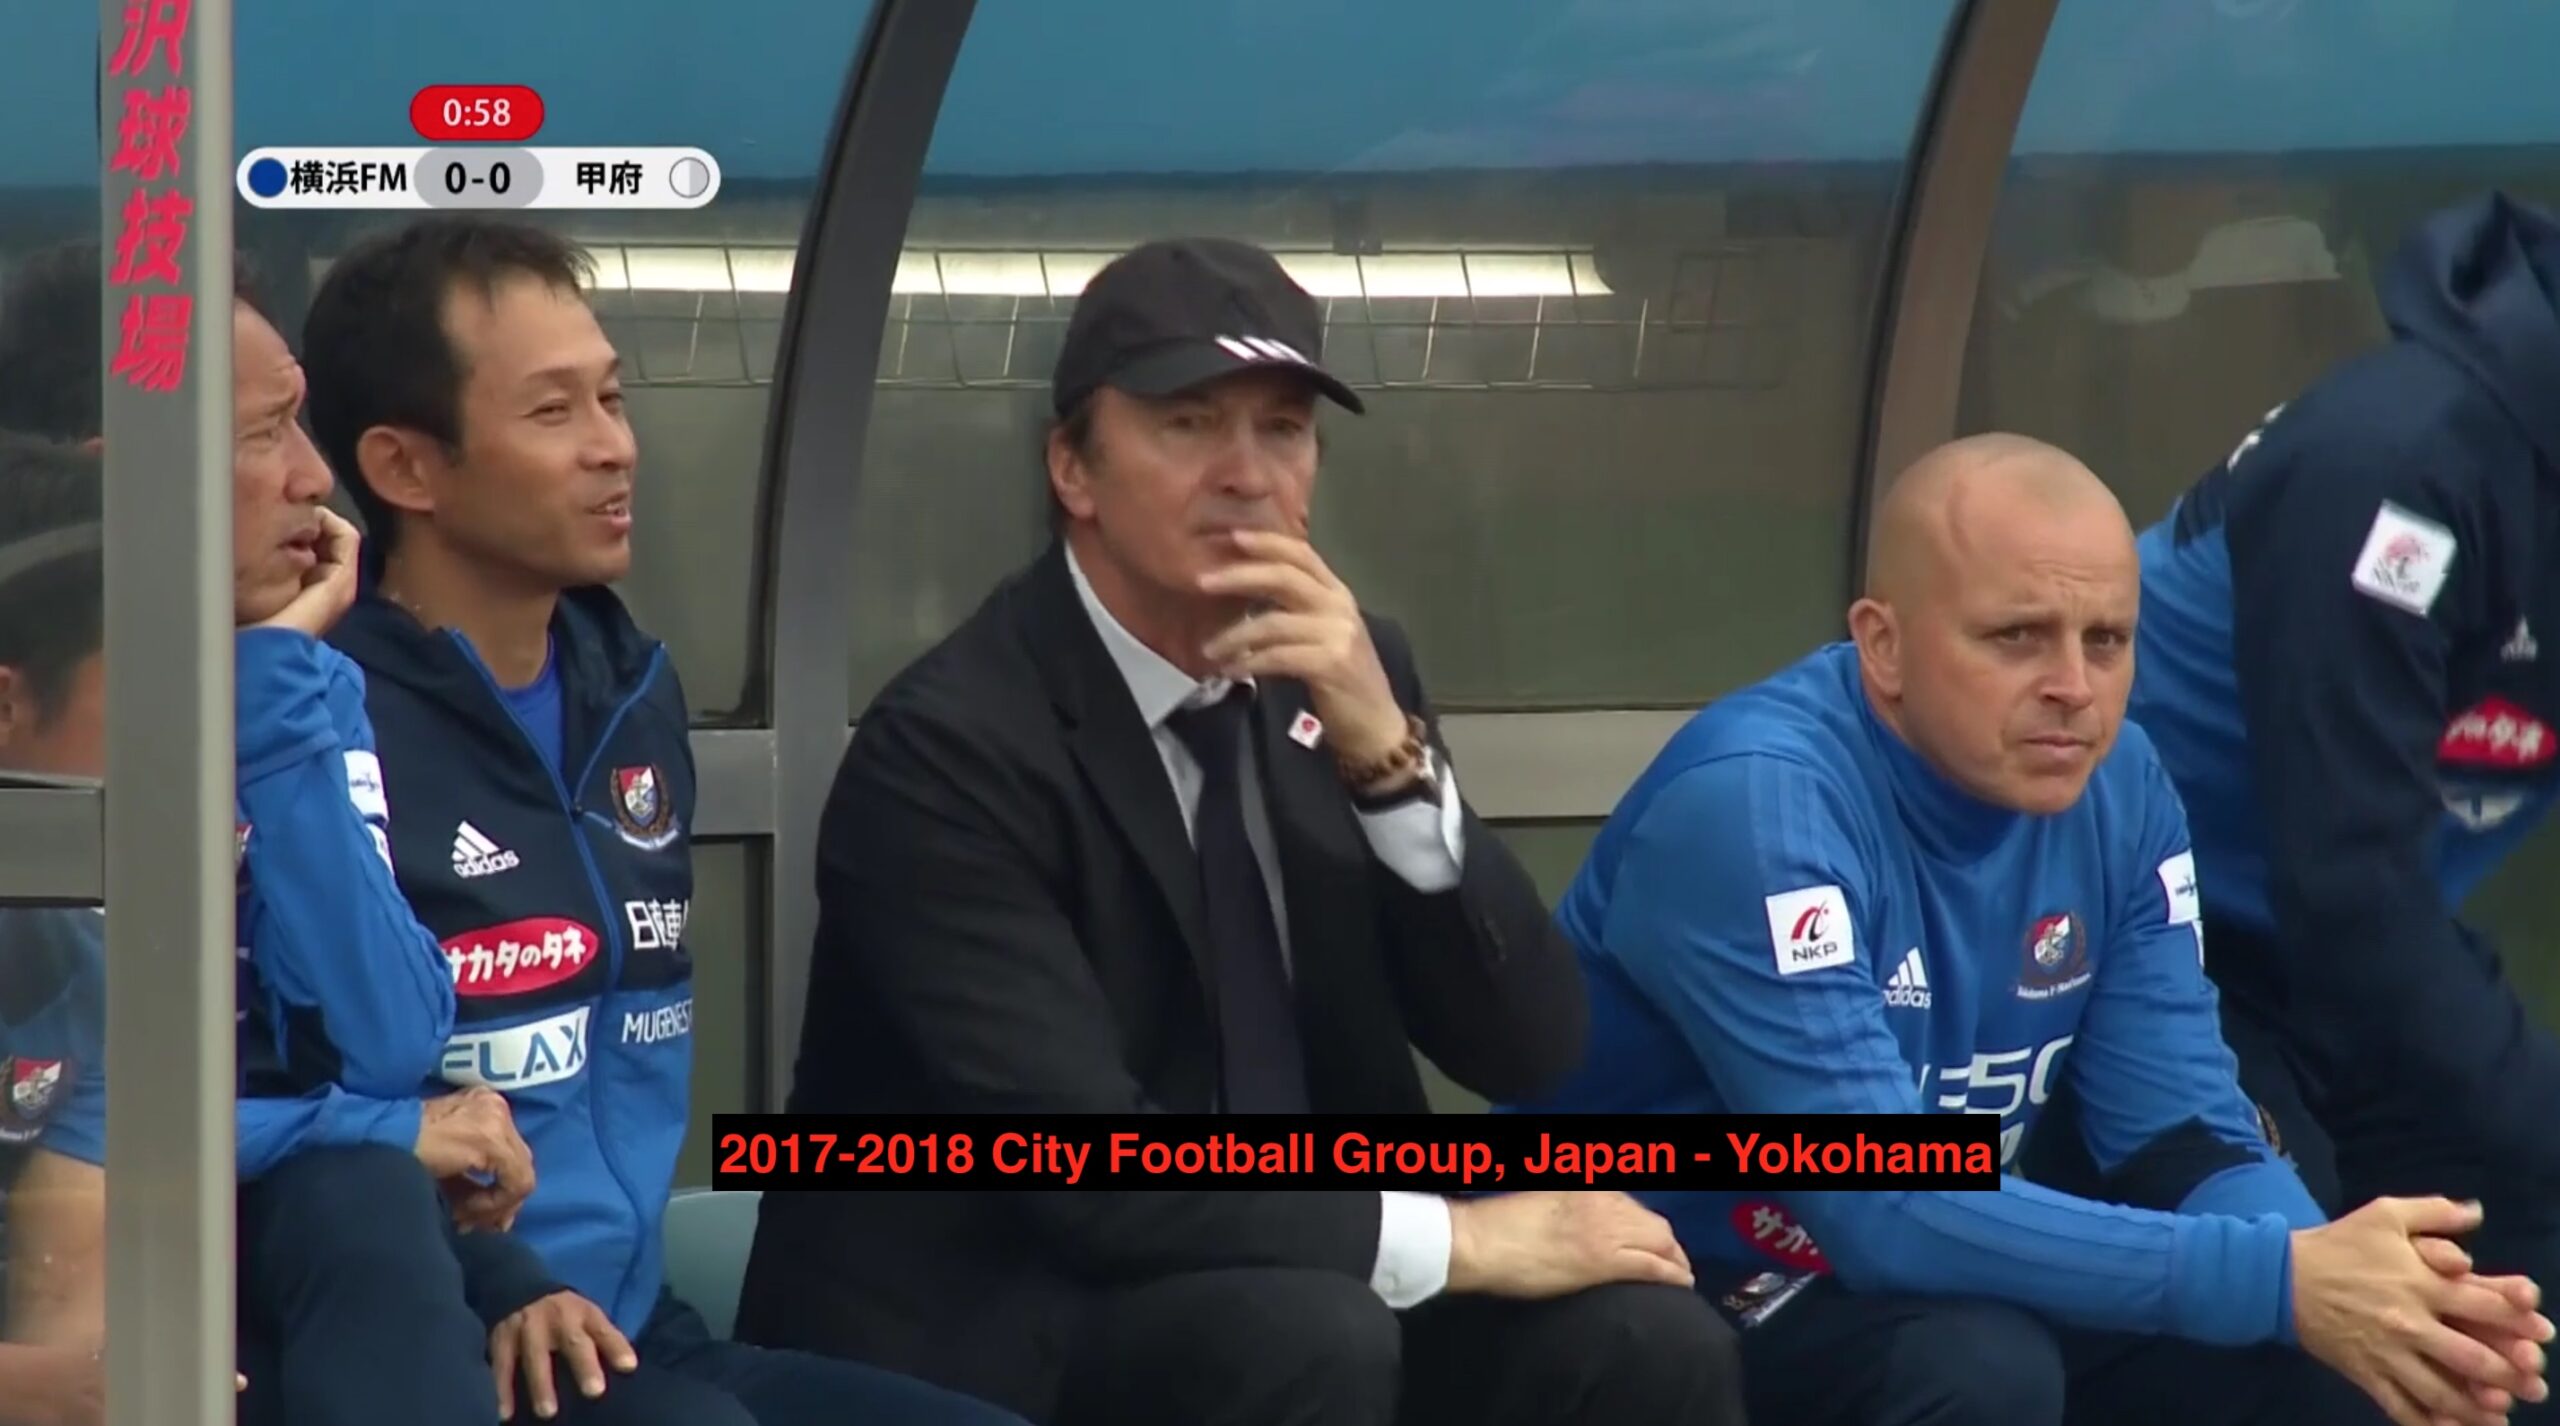 2017-2018 City Football Group, Japan - Yokohama